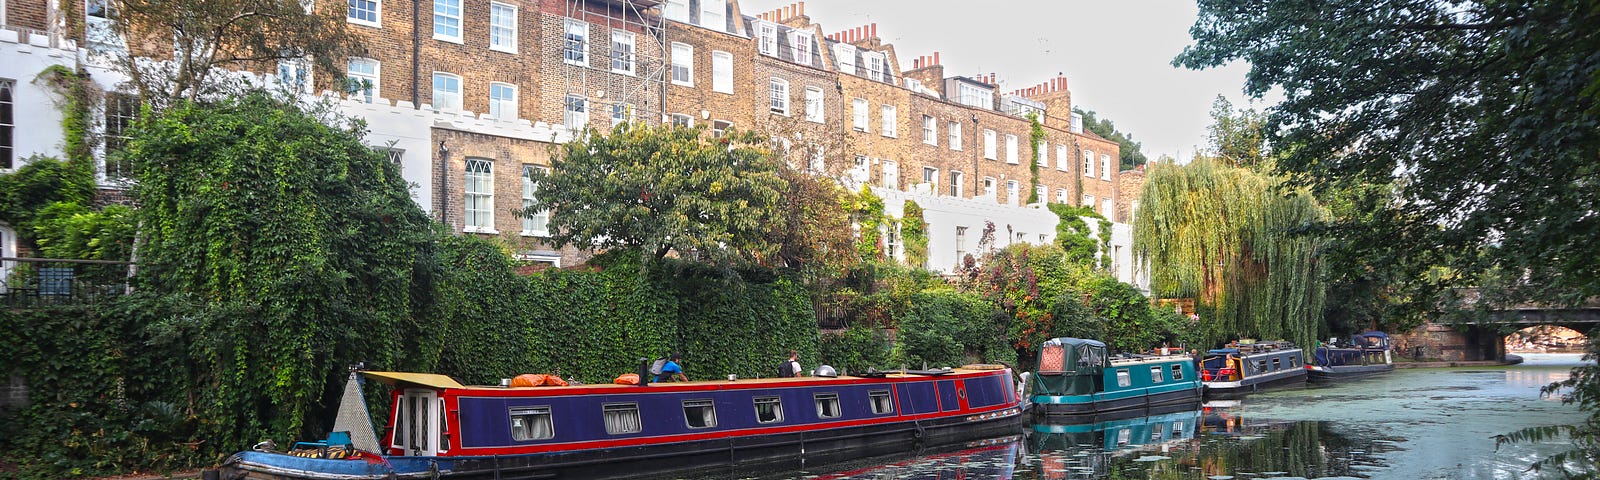 A houseboat along Regent’s Canal in London